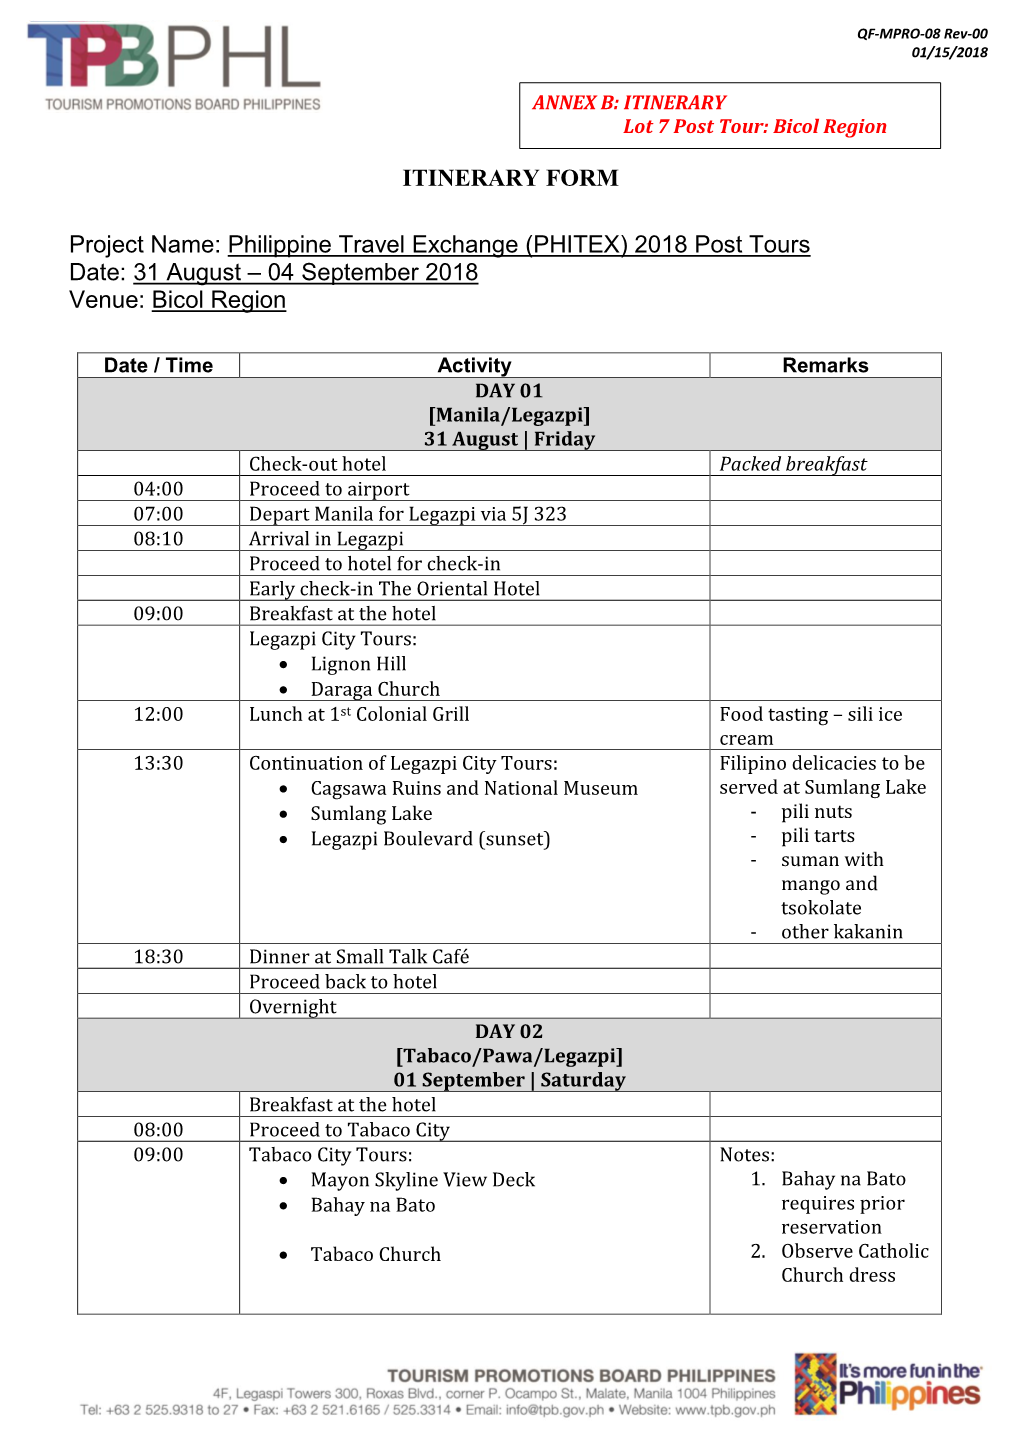 ITB2018-013 Annex B Lot7 PHITEX Post Tour Bicol Region